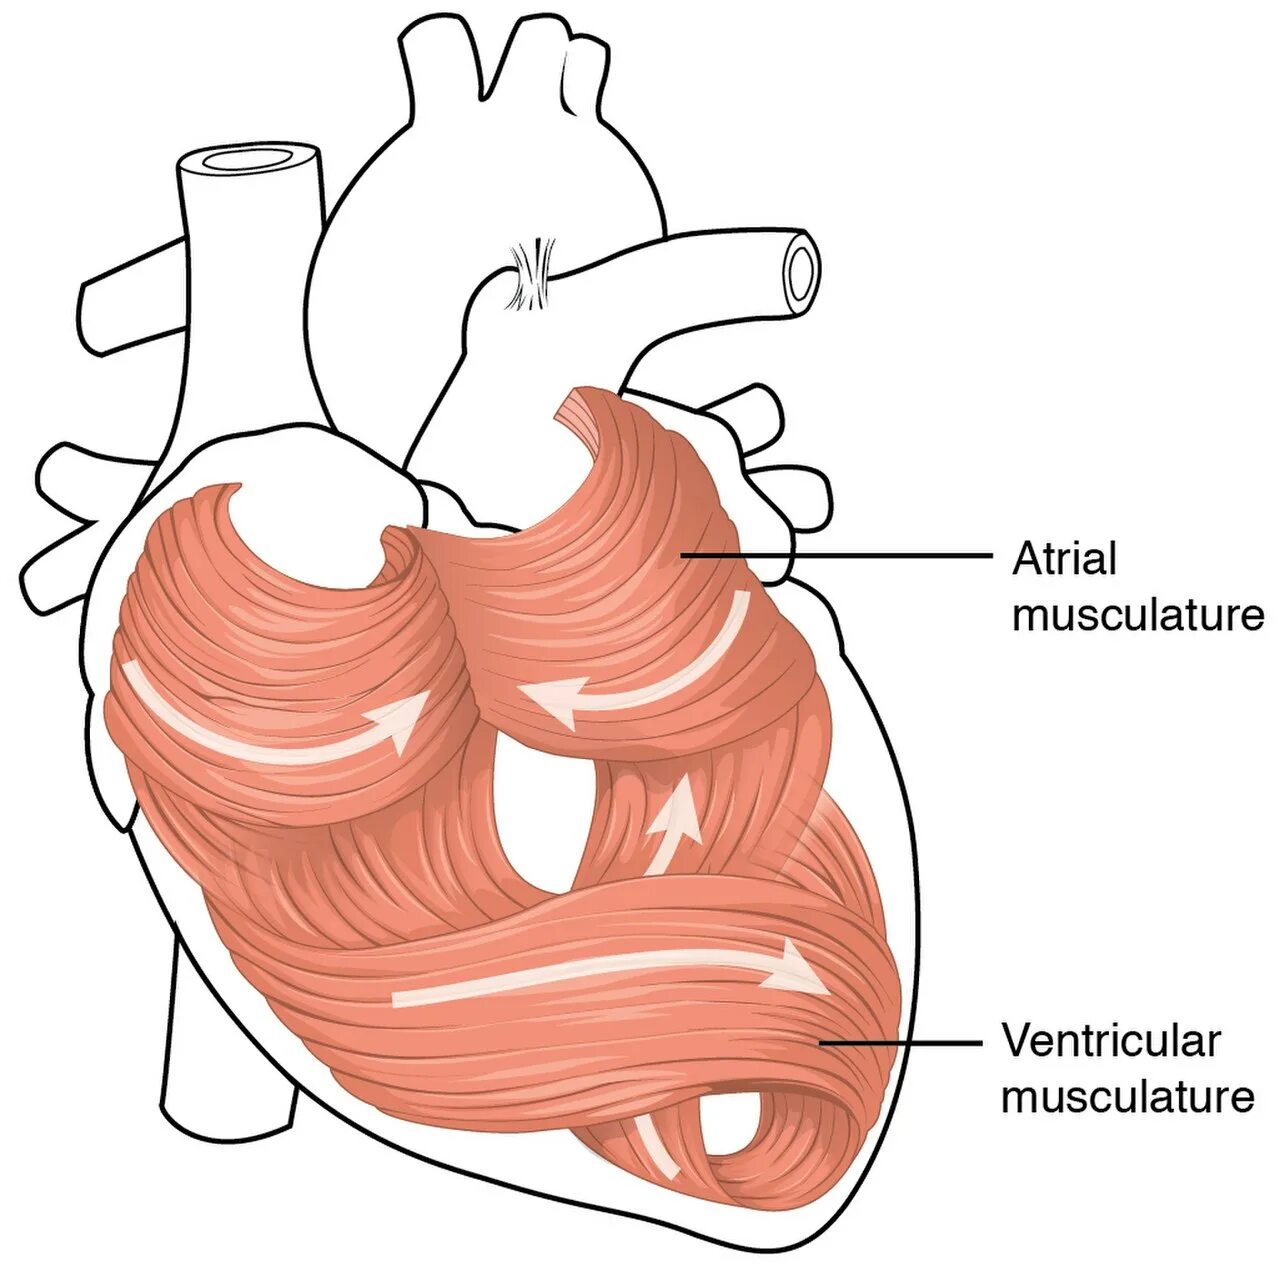 Миокард правого предсердия. Мышечная структура сердца. Сердечная мышца человека.